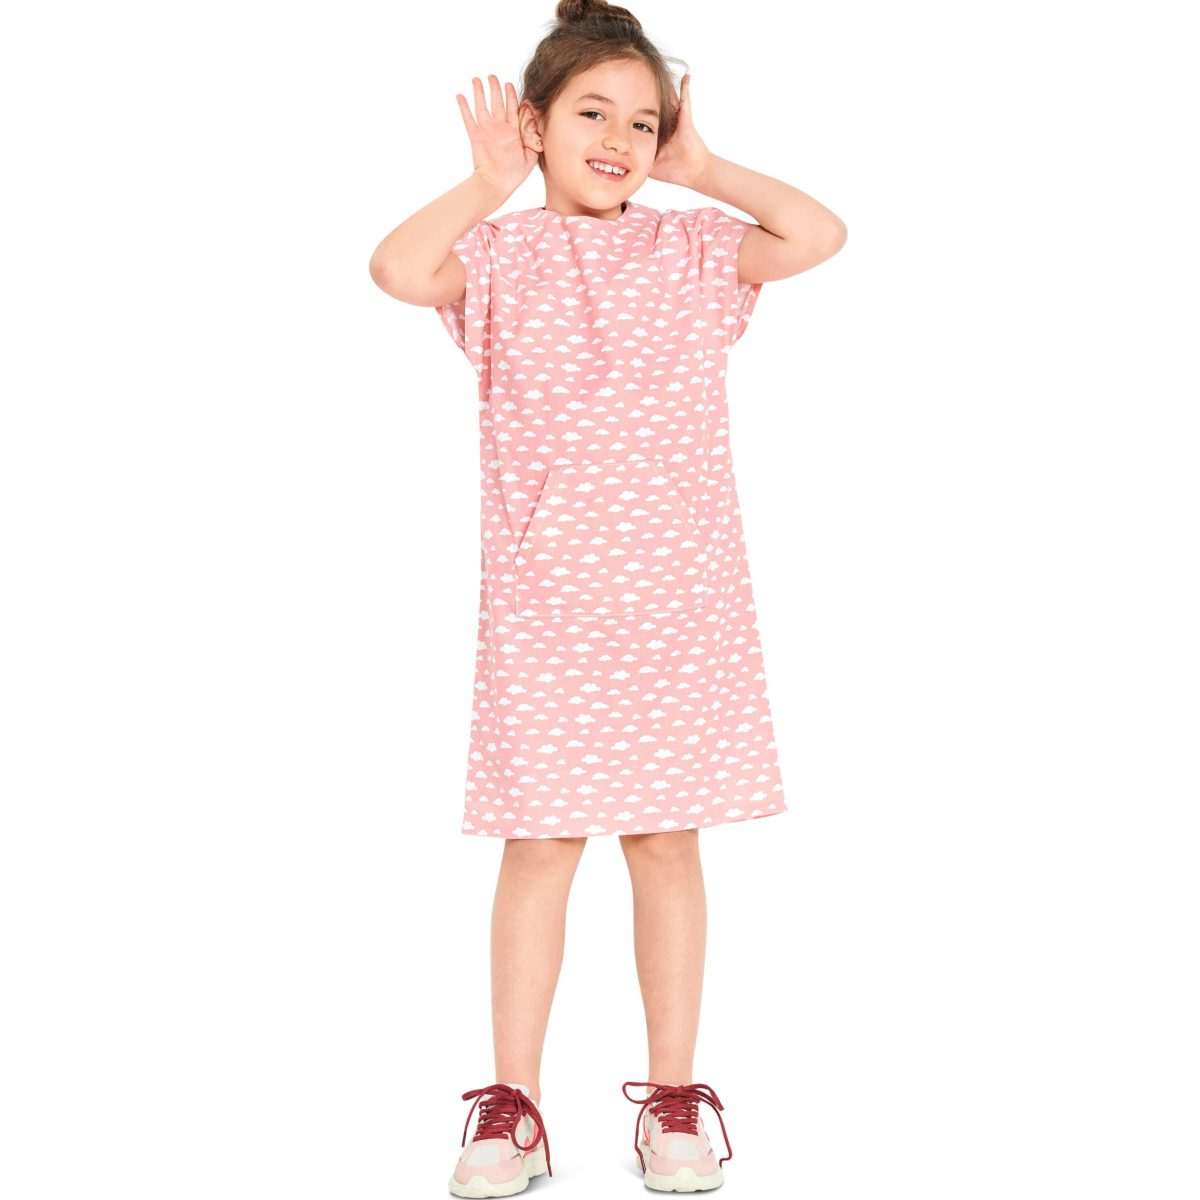 Burda Style Pattern 9282 Children's Easy Top and Dress